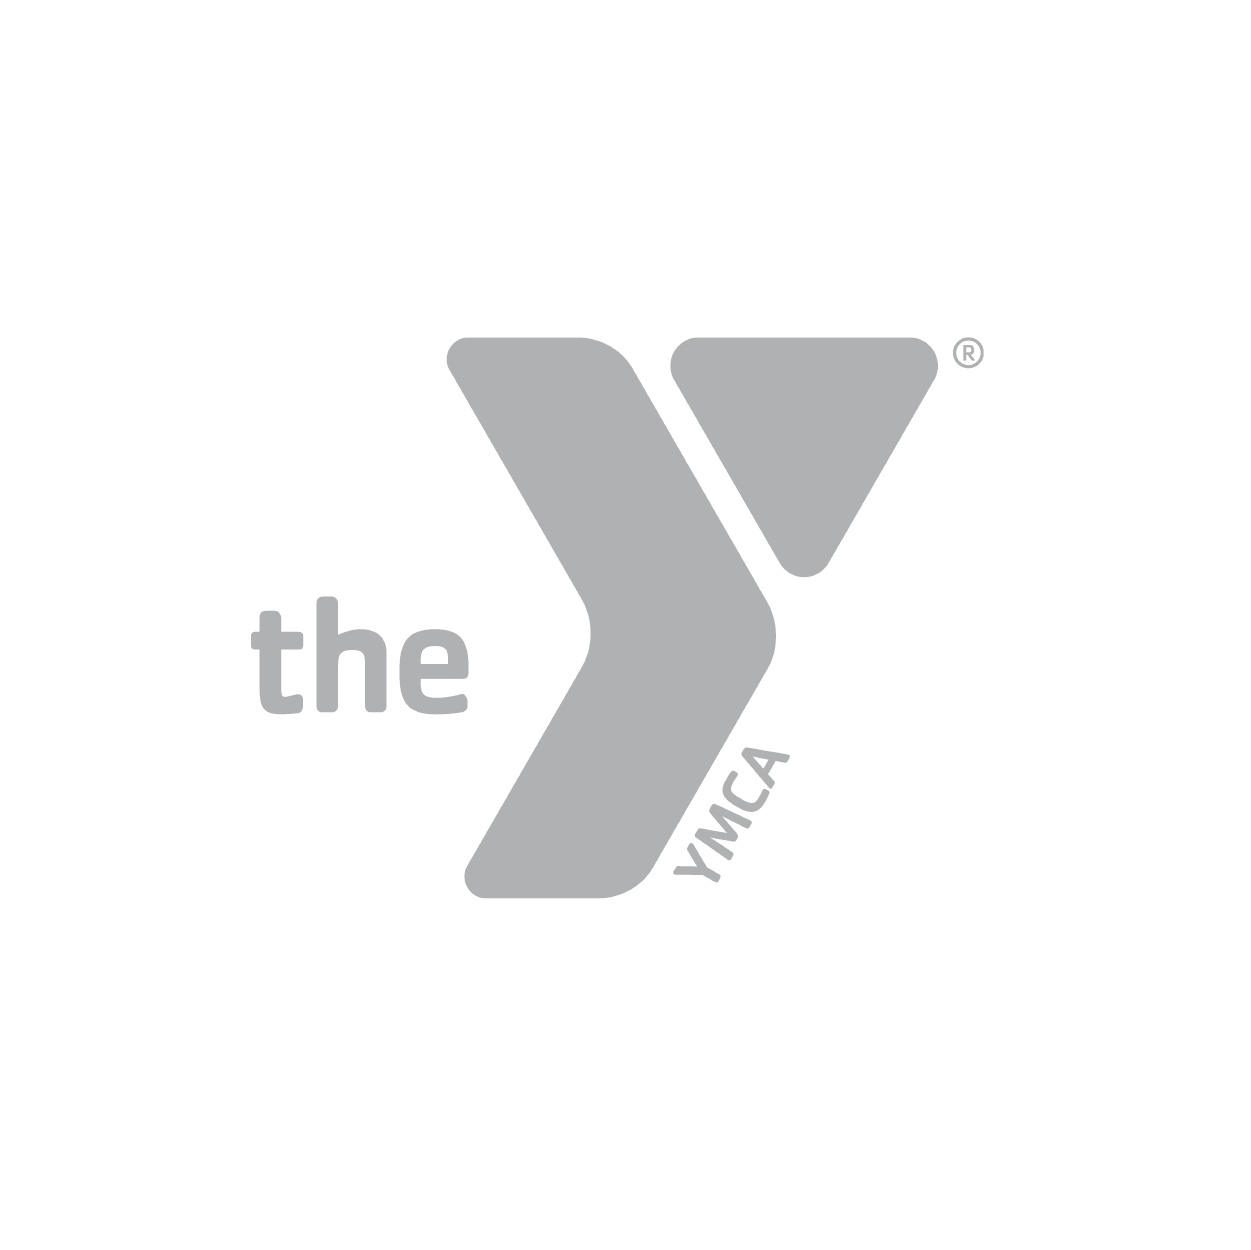 The YMCA logo in gray